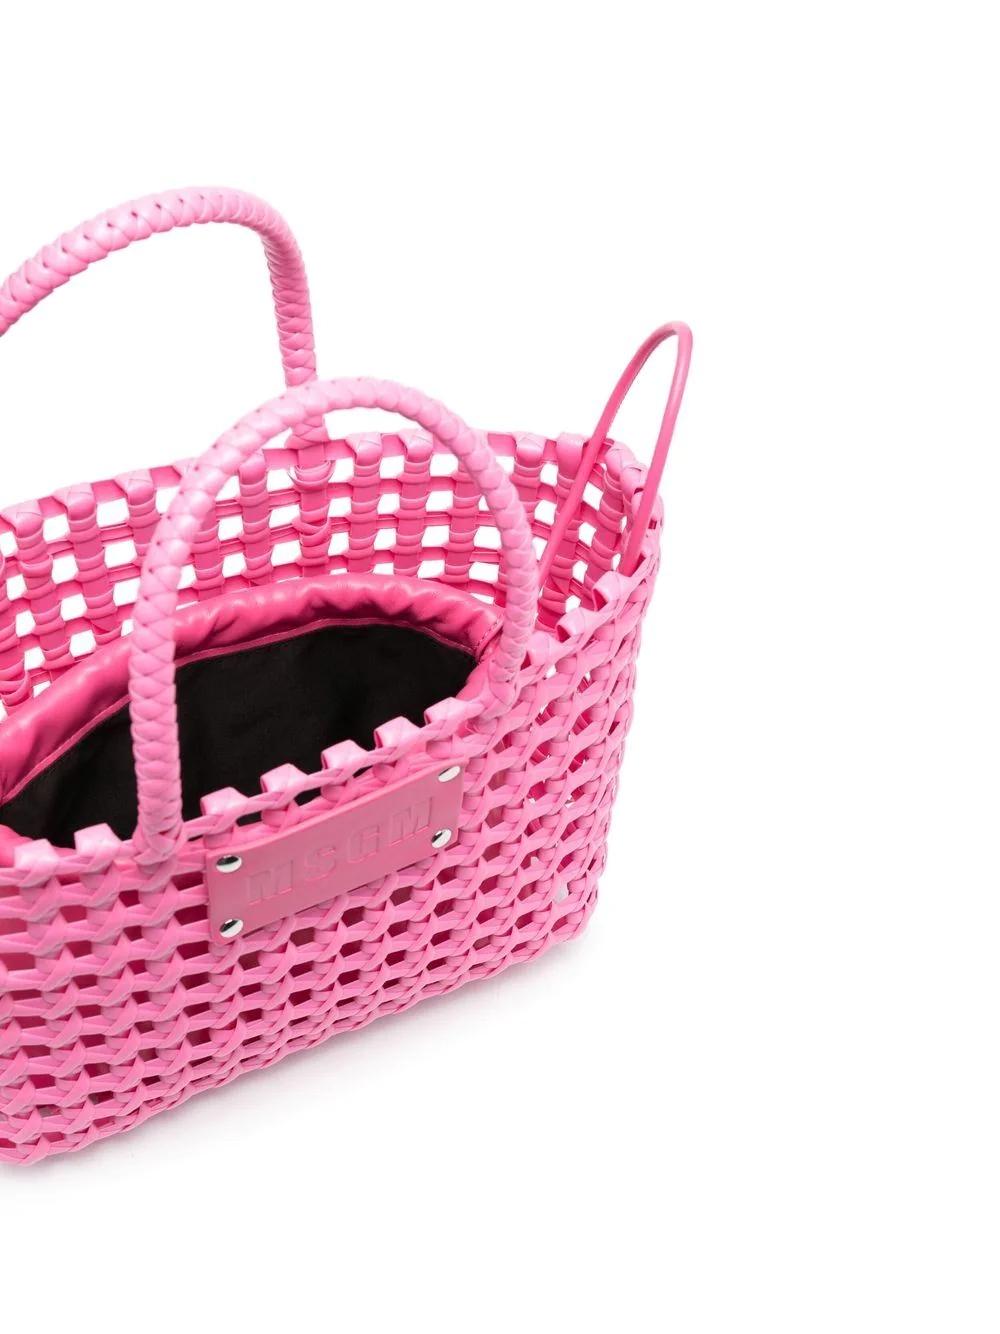 Bolso MSGM rosa mini bucket tote with pouch